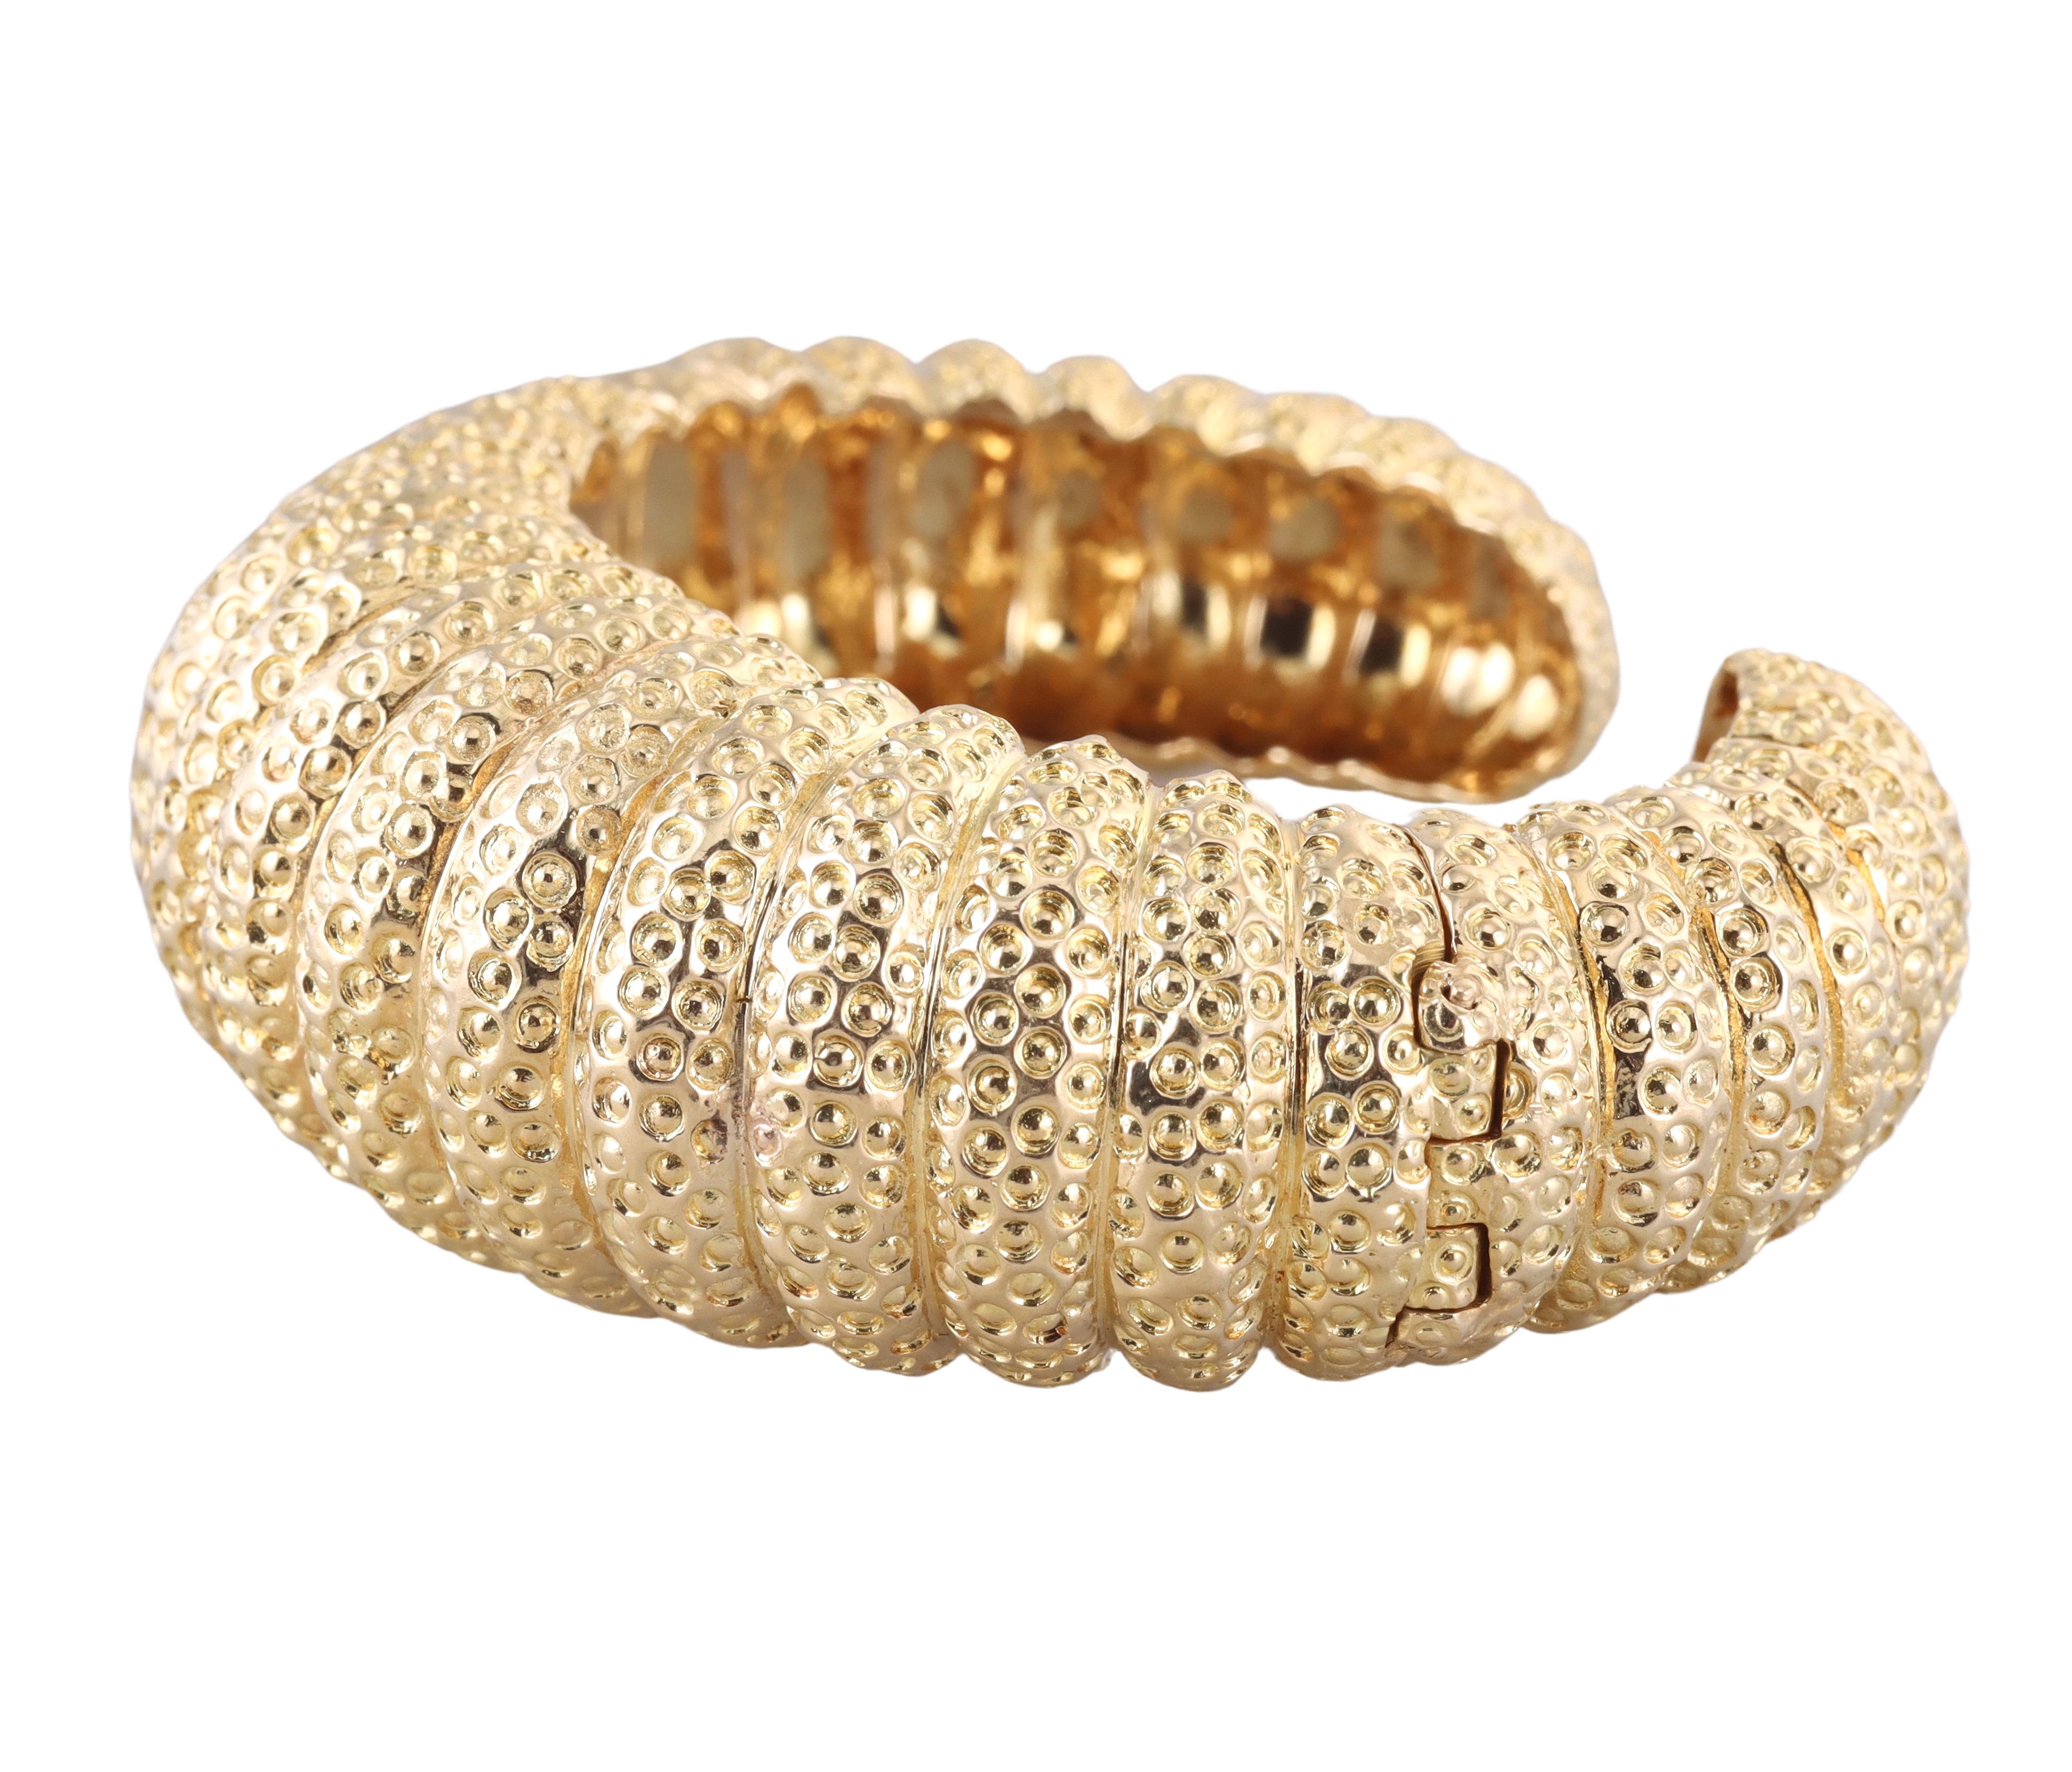 Unusual 18k gold sea urchin design cuff bracelet by David Webb. The bracelet will fit an approximately 6.5